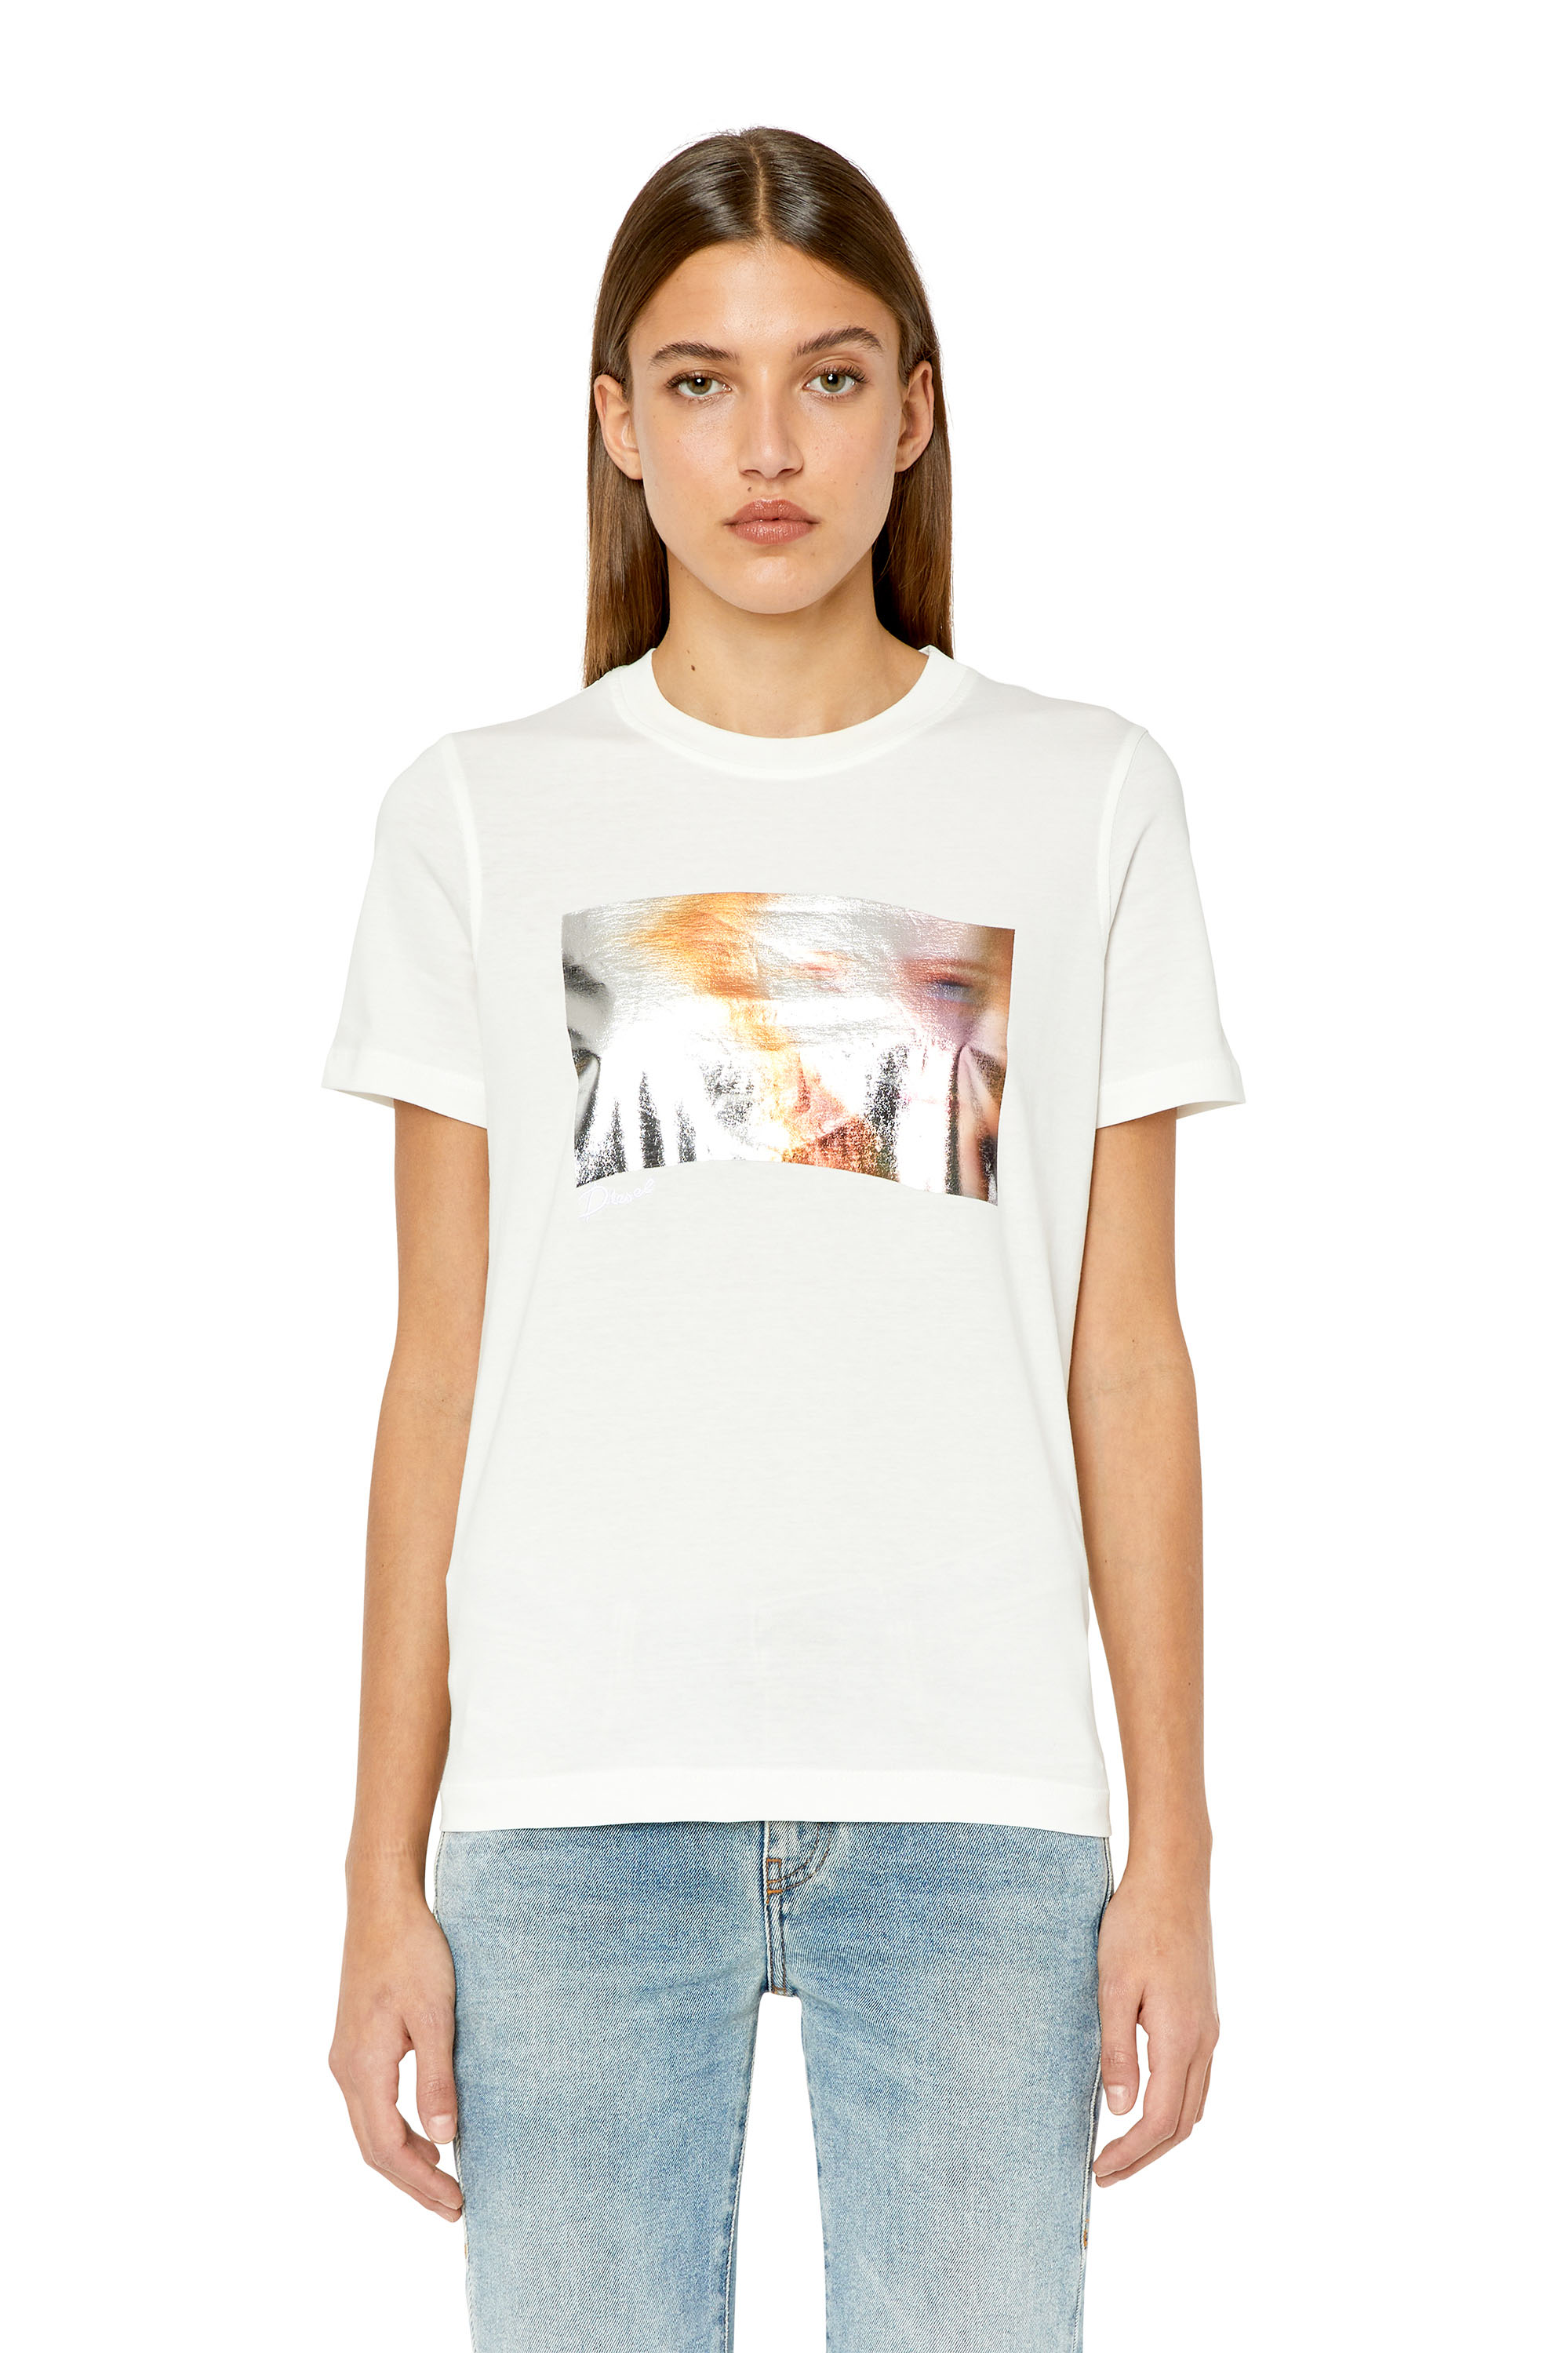 retning Wedge spisekammer T-REG-G3 Woman: T-shirt with metallic blurry-face print | Diesel